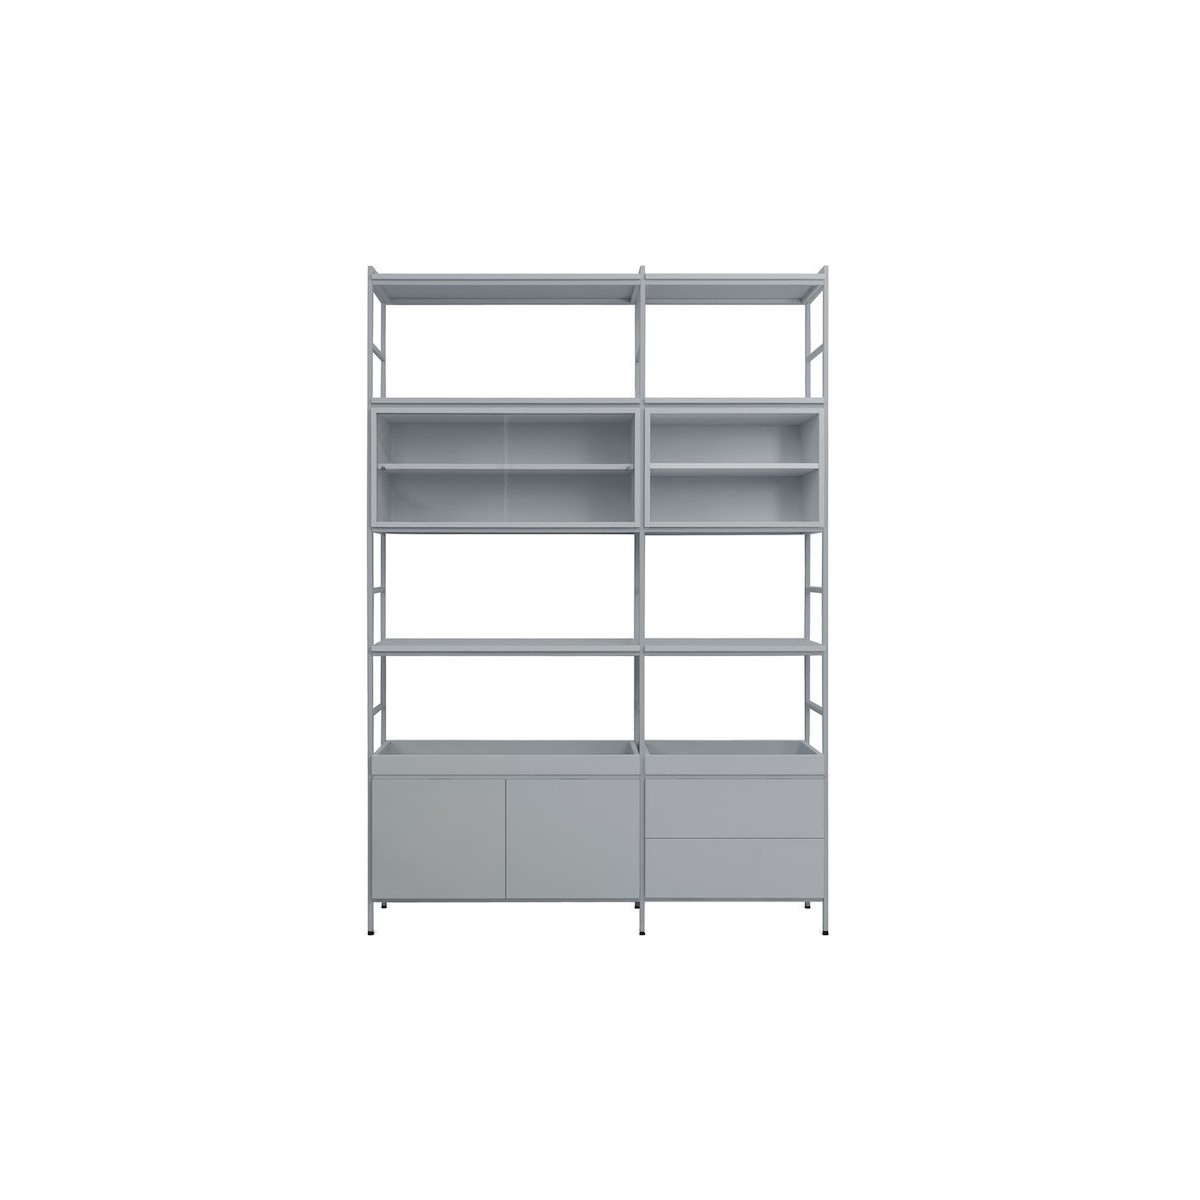 grey kitchen storage - preconfiguration - MOLTO